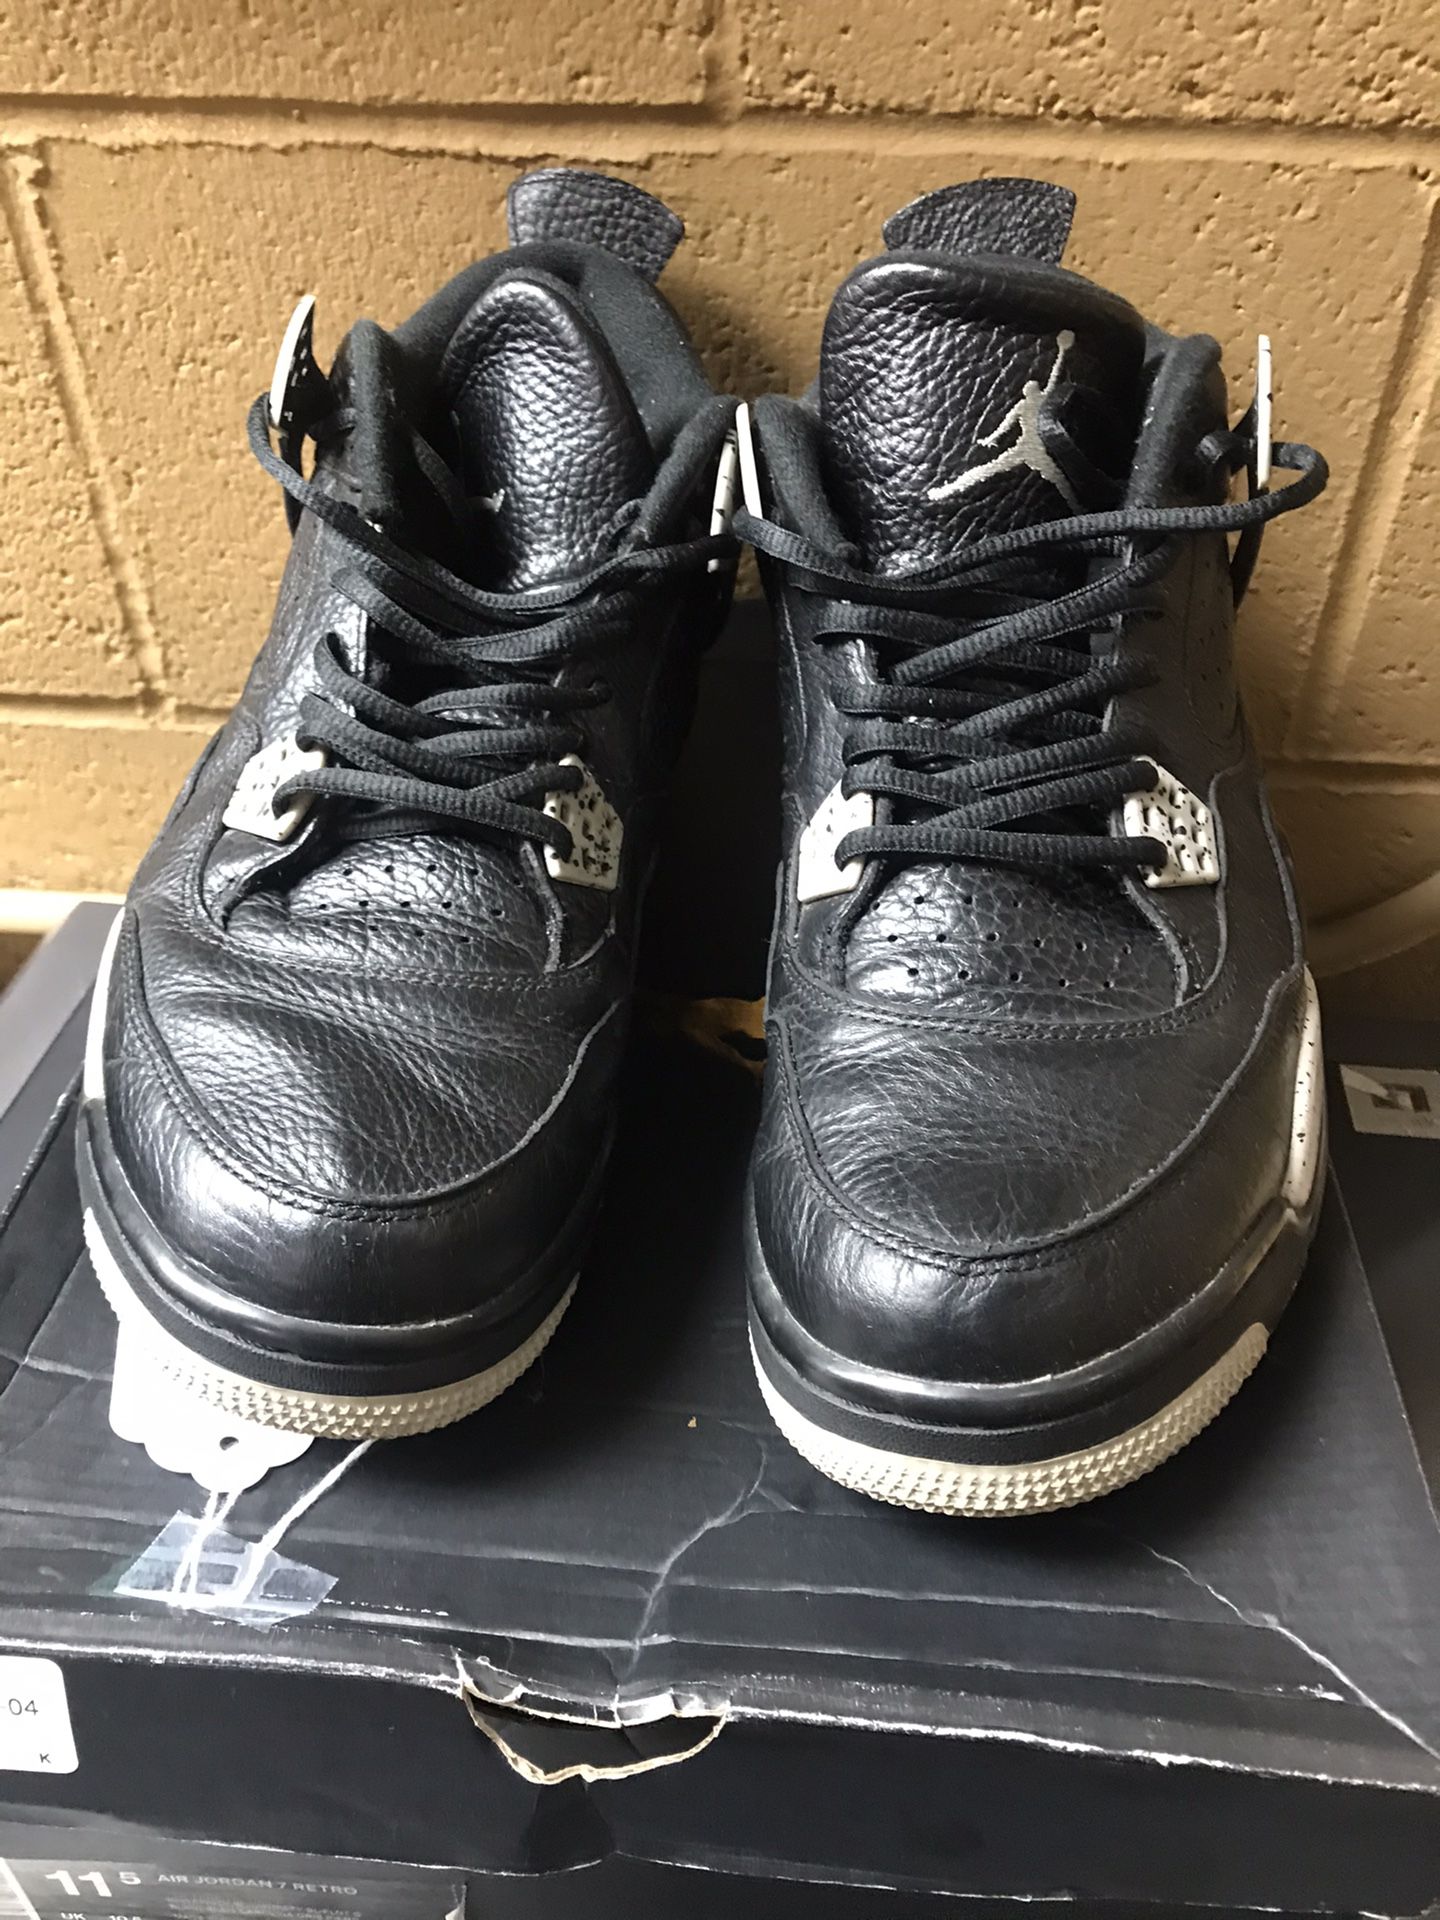 Nike Air Jordan 4 IV Retro LS Oreo shoes Men's US Size 12 Black/Tech Grey 314254 003